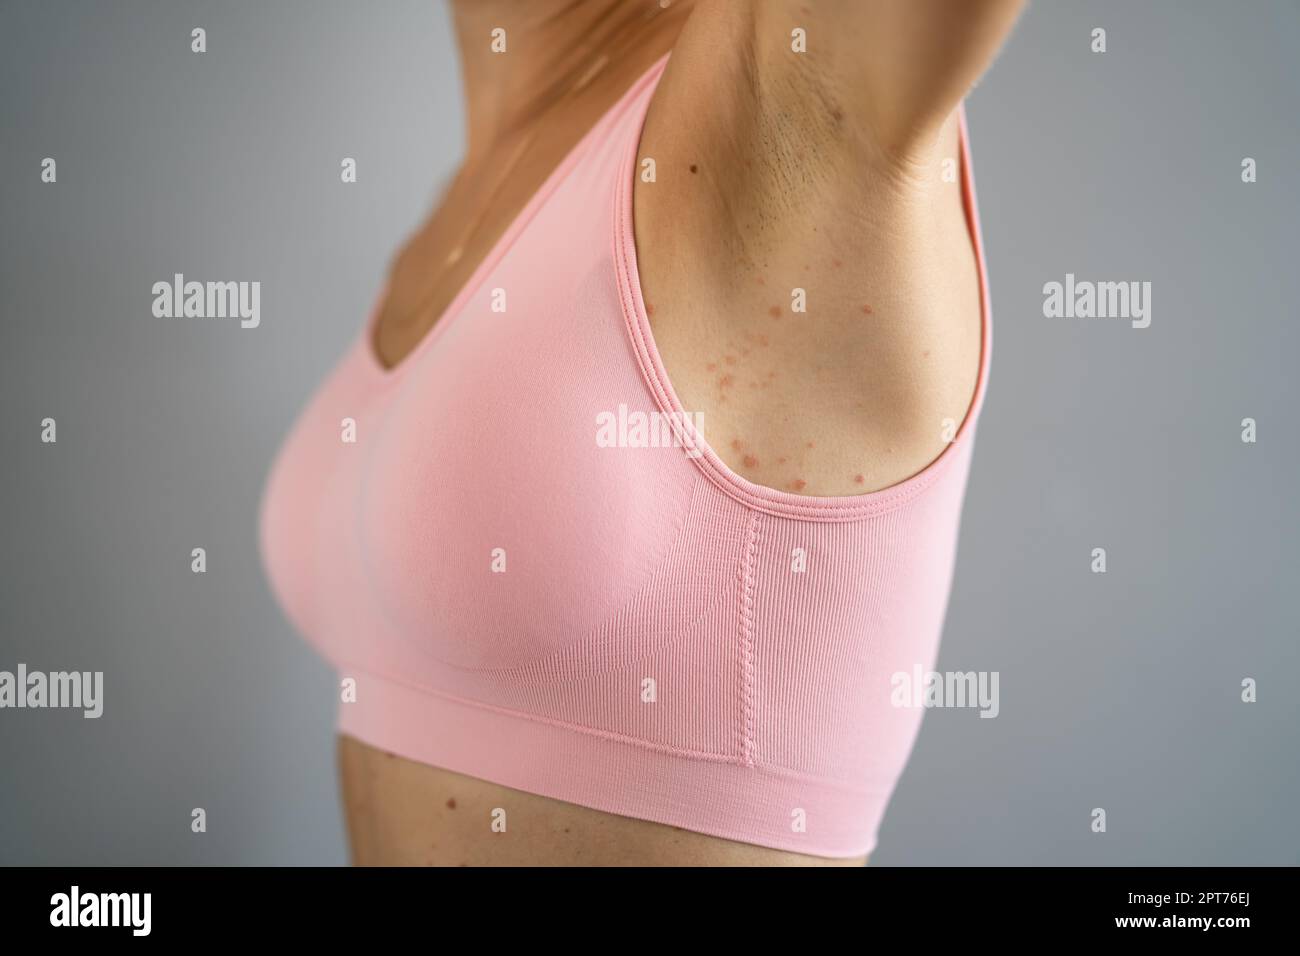 https://c8.alamy.com/comp/2PT76EJ/woman-body-skin-rash-with-red-allergy-eruption-2PT76EJ.jpg